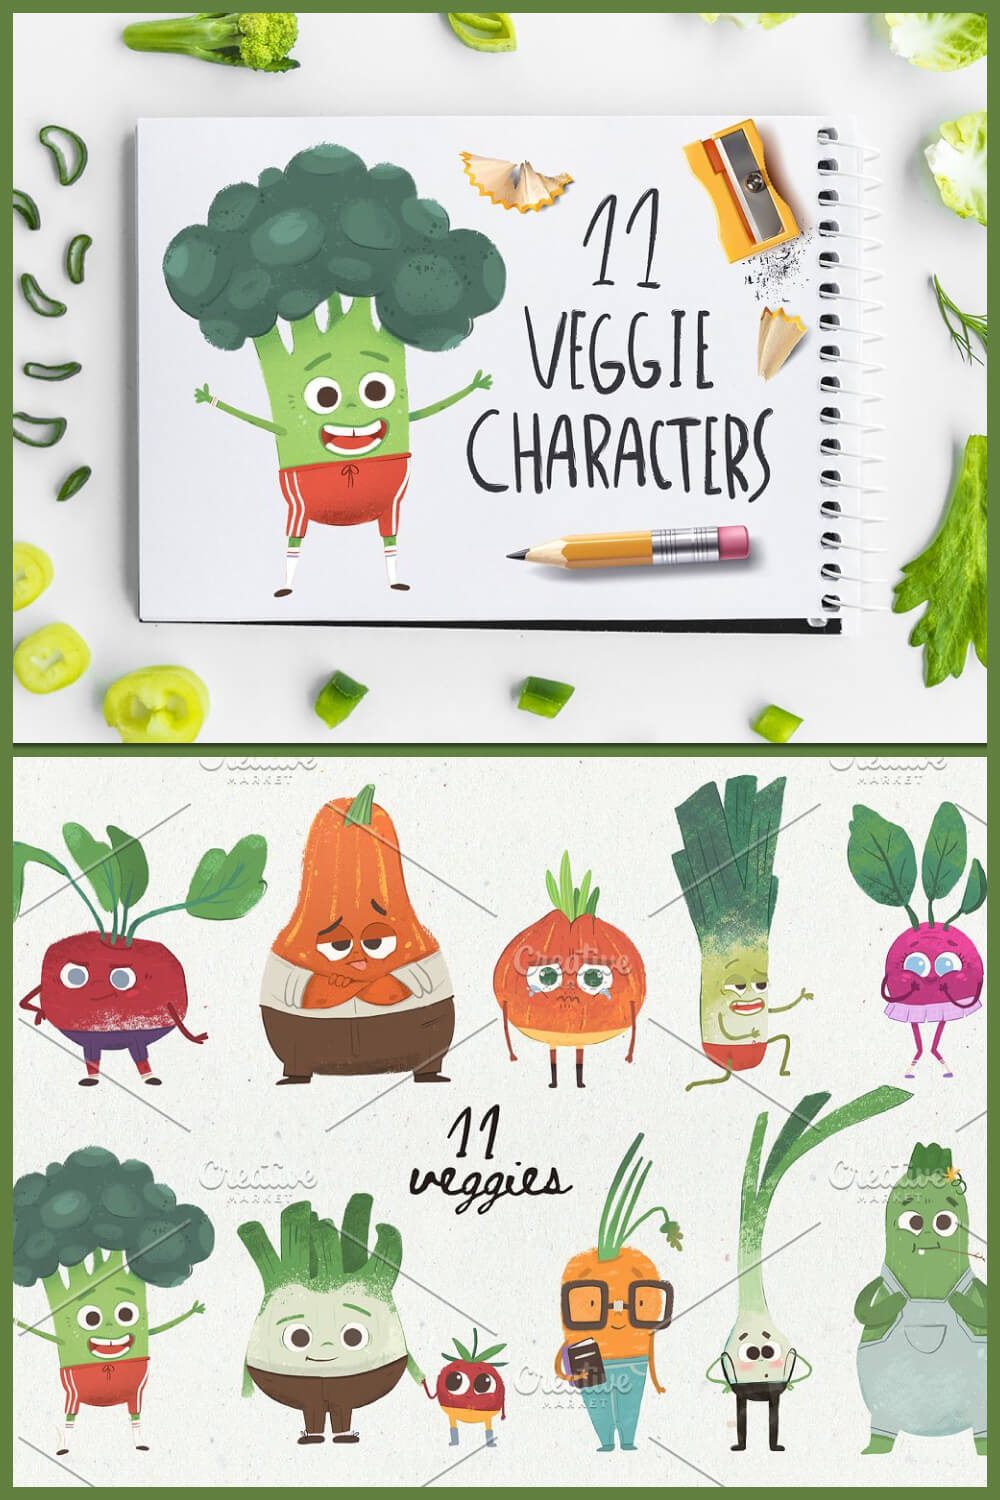 11 veggie characters.